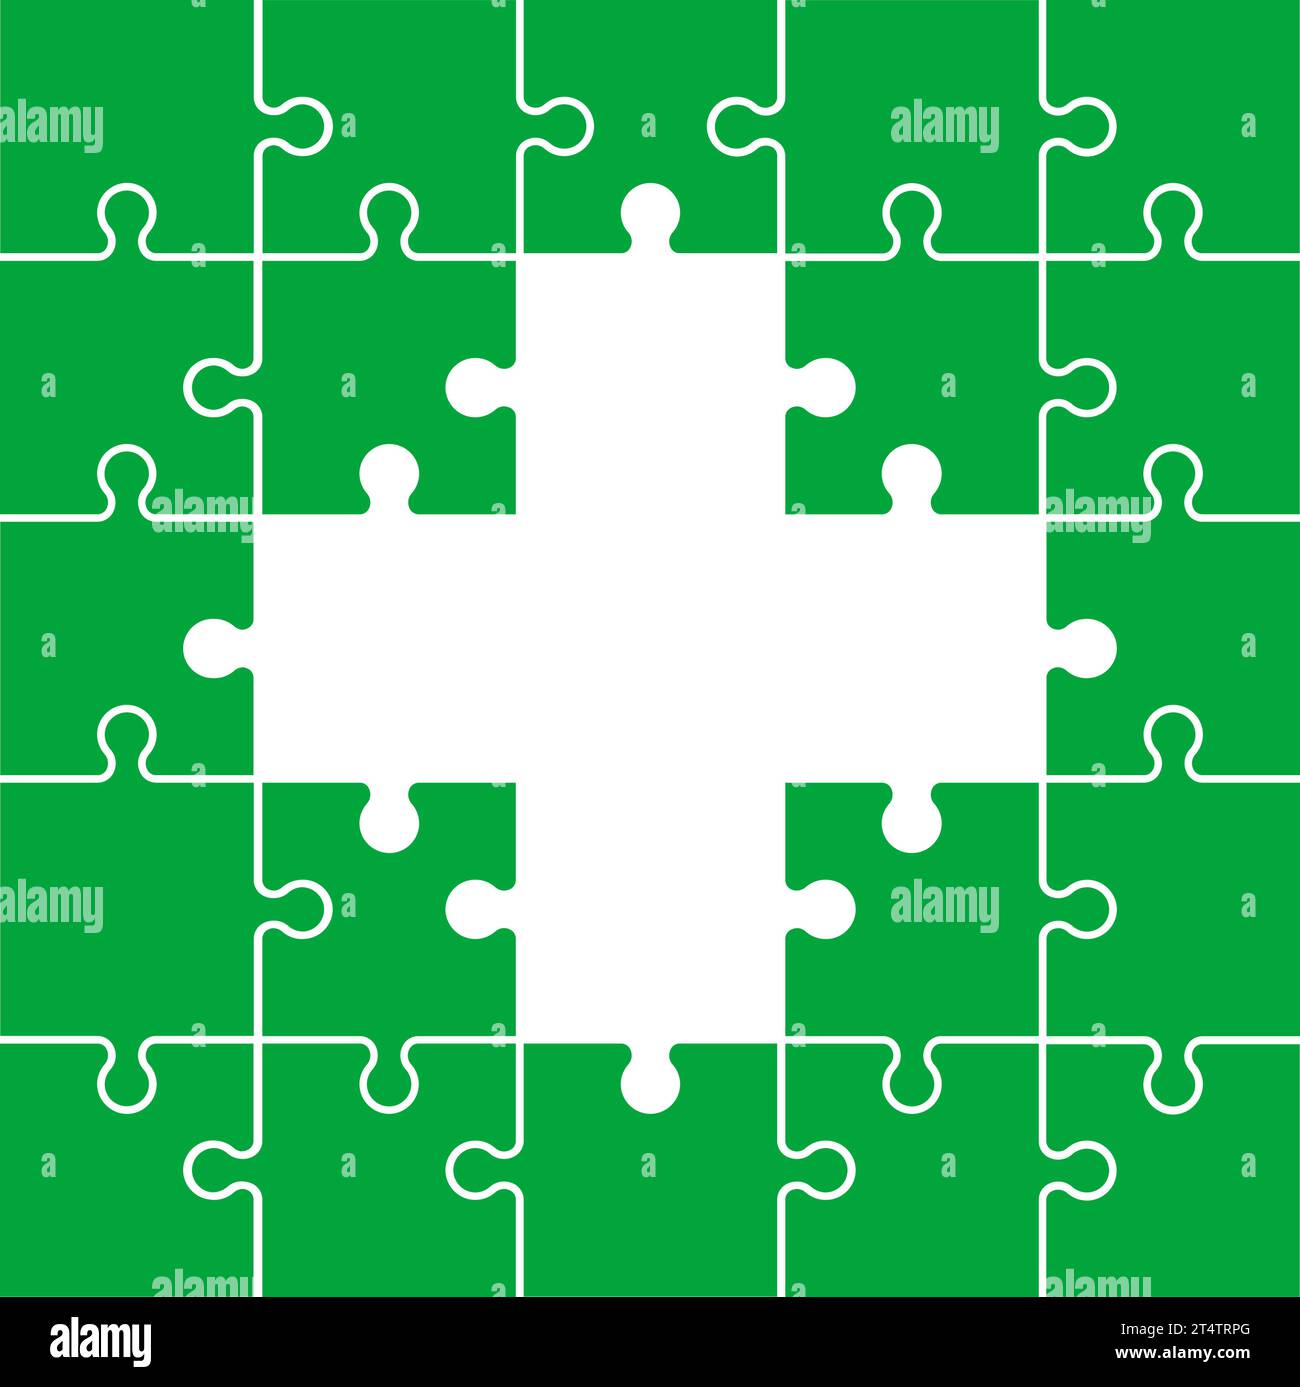 Pharmacy cross symbol puzzle background. vector illustration Stock Vector